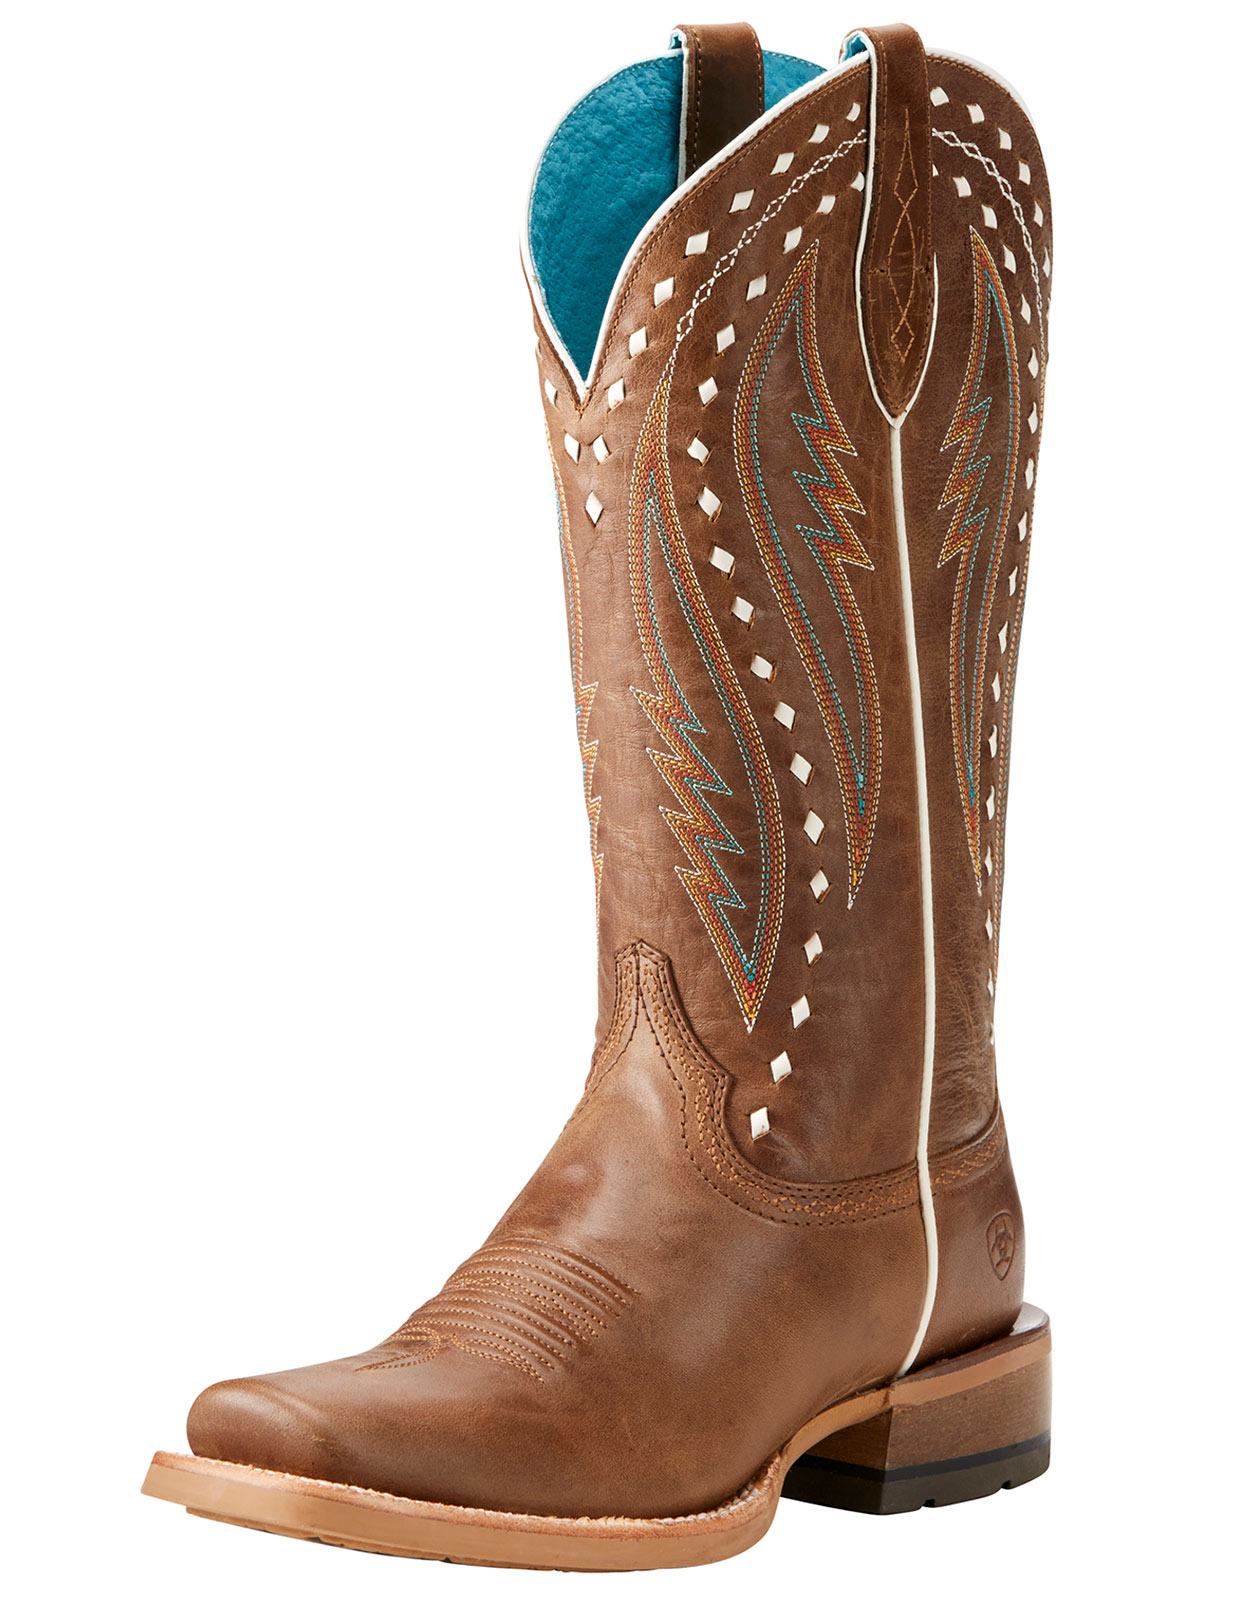 Cowboy Boots for Women - Women's Western Boots